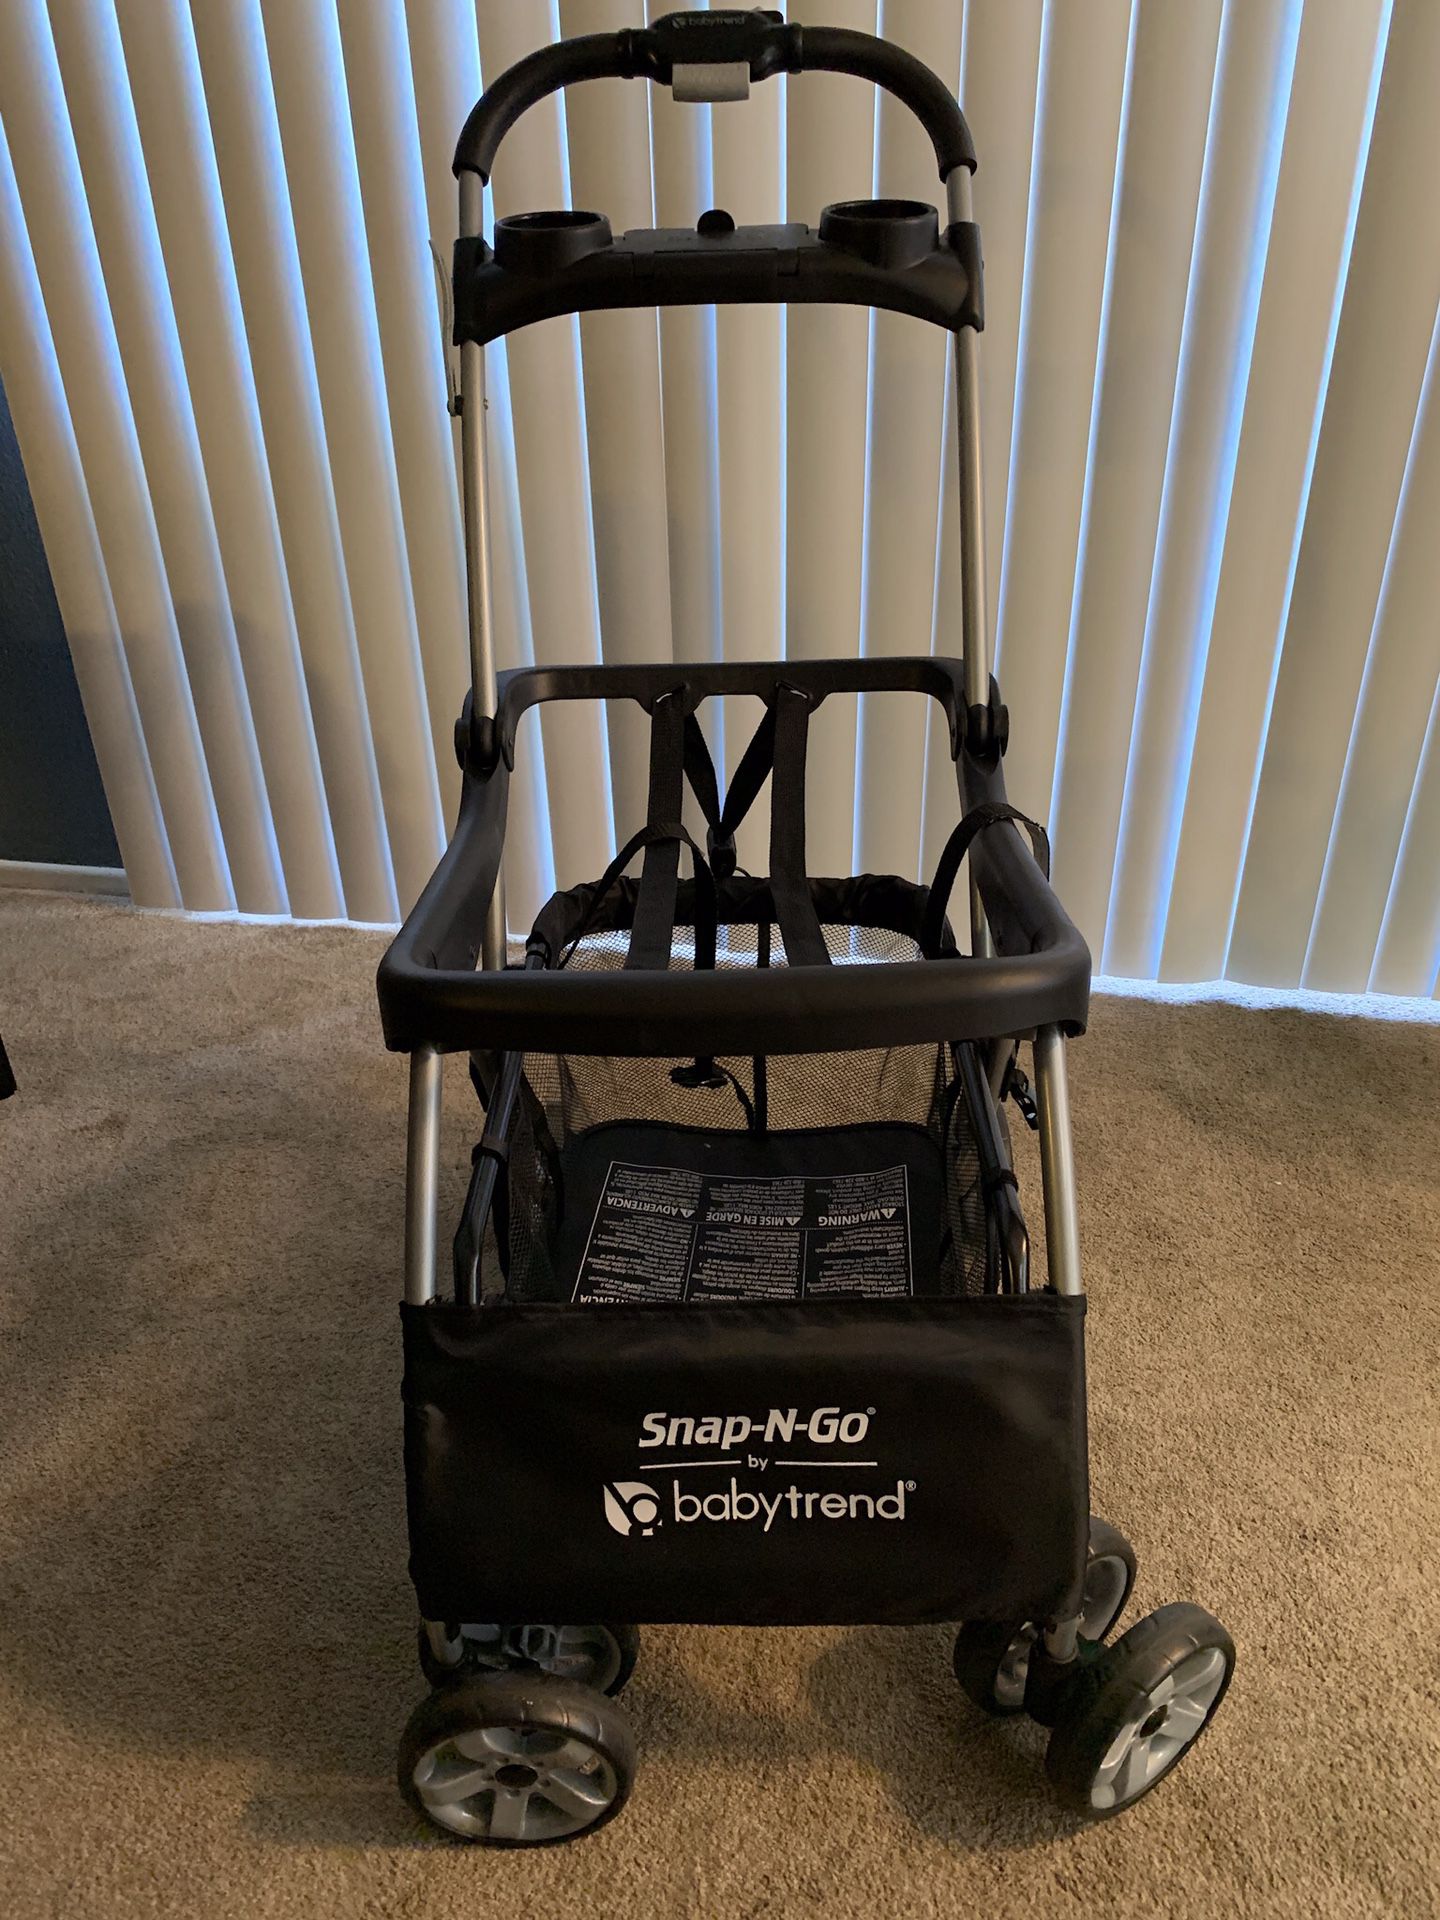 Baby Trend Snap n go infant car seat holder